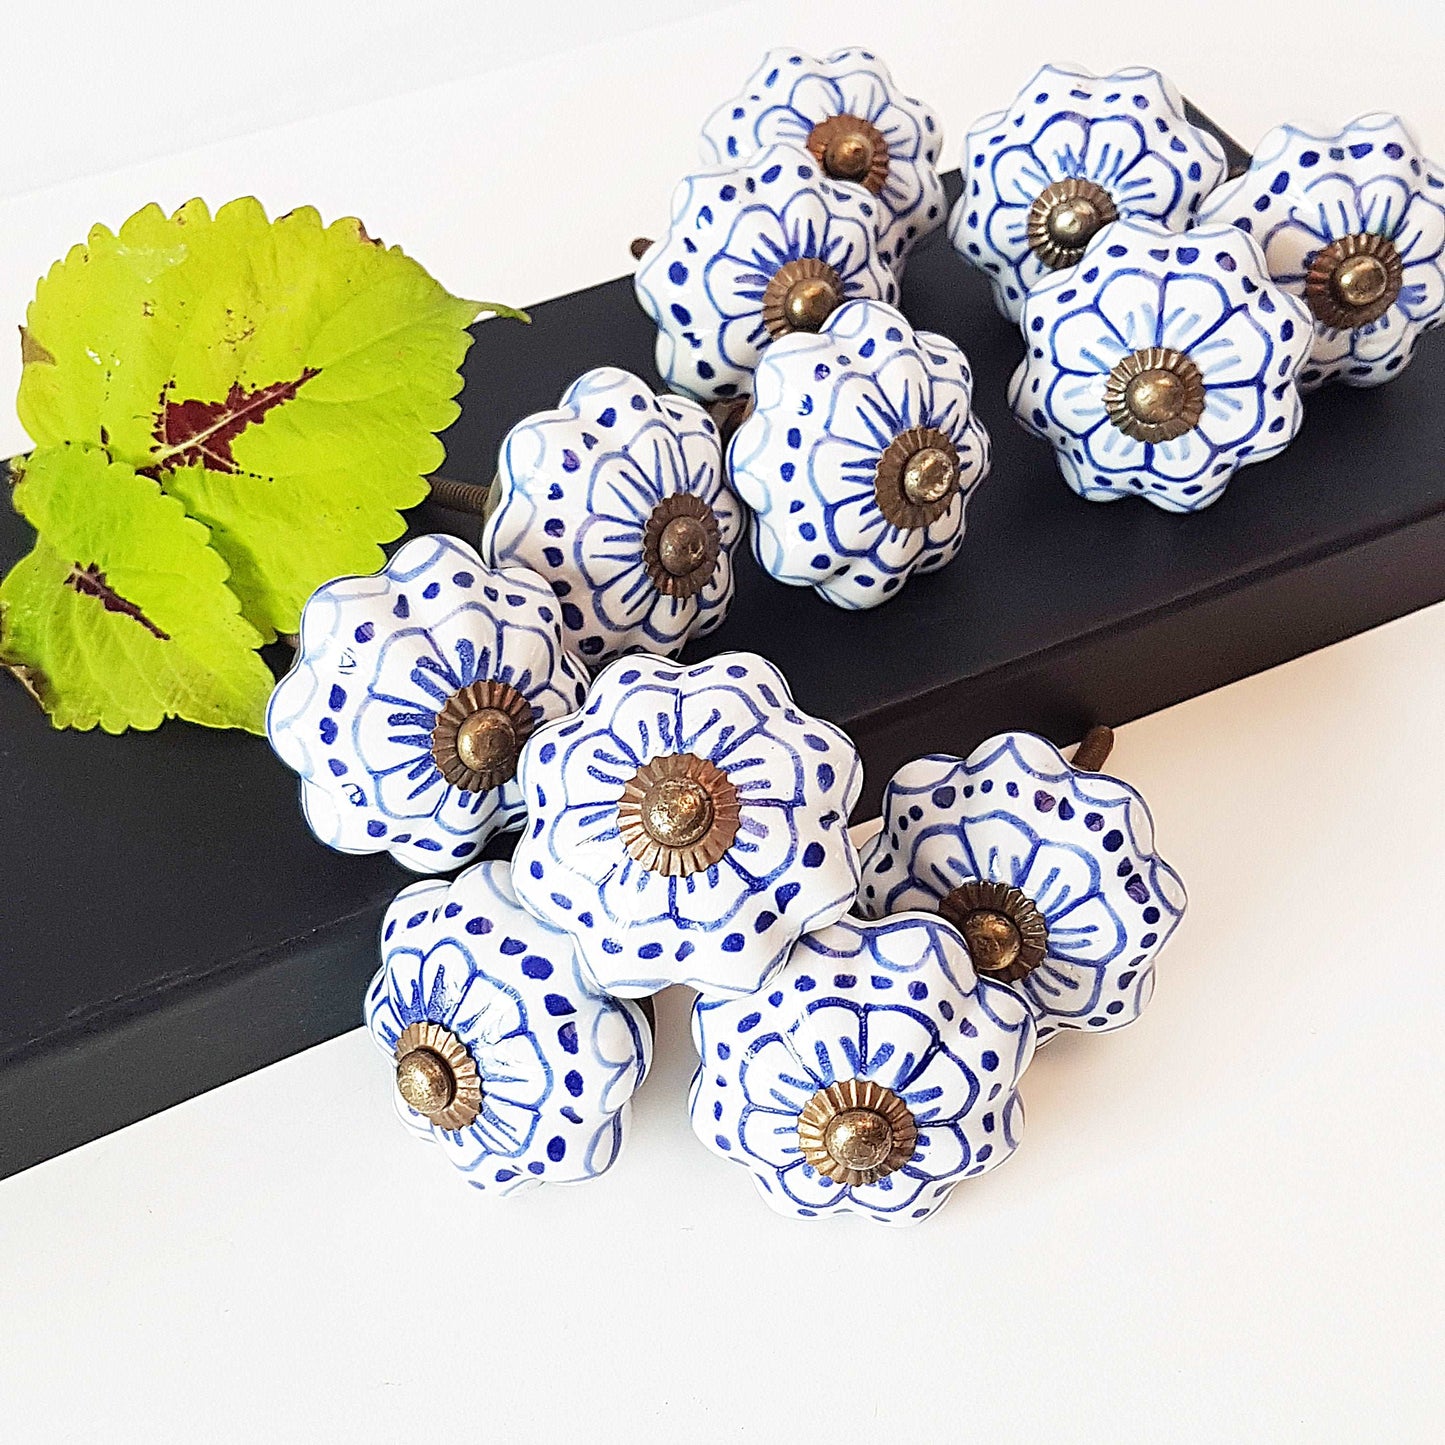 Cabinet knob drawer pull set of 12 in blue & white Delft floral design.